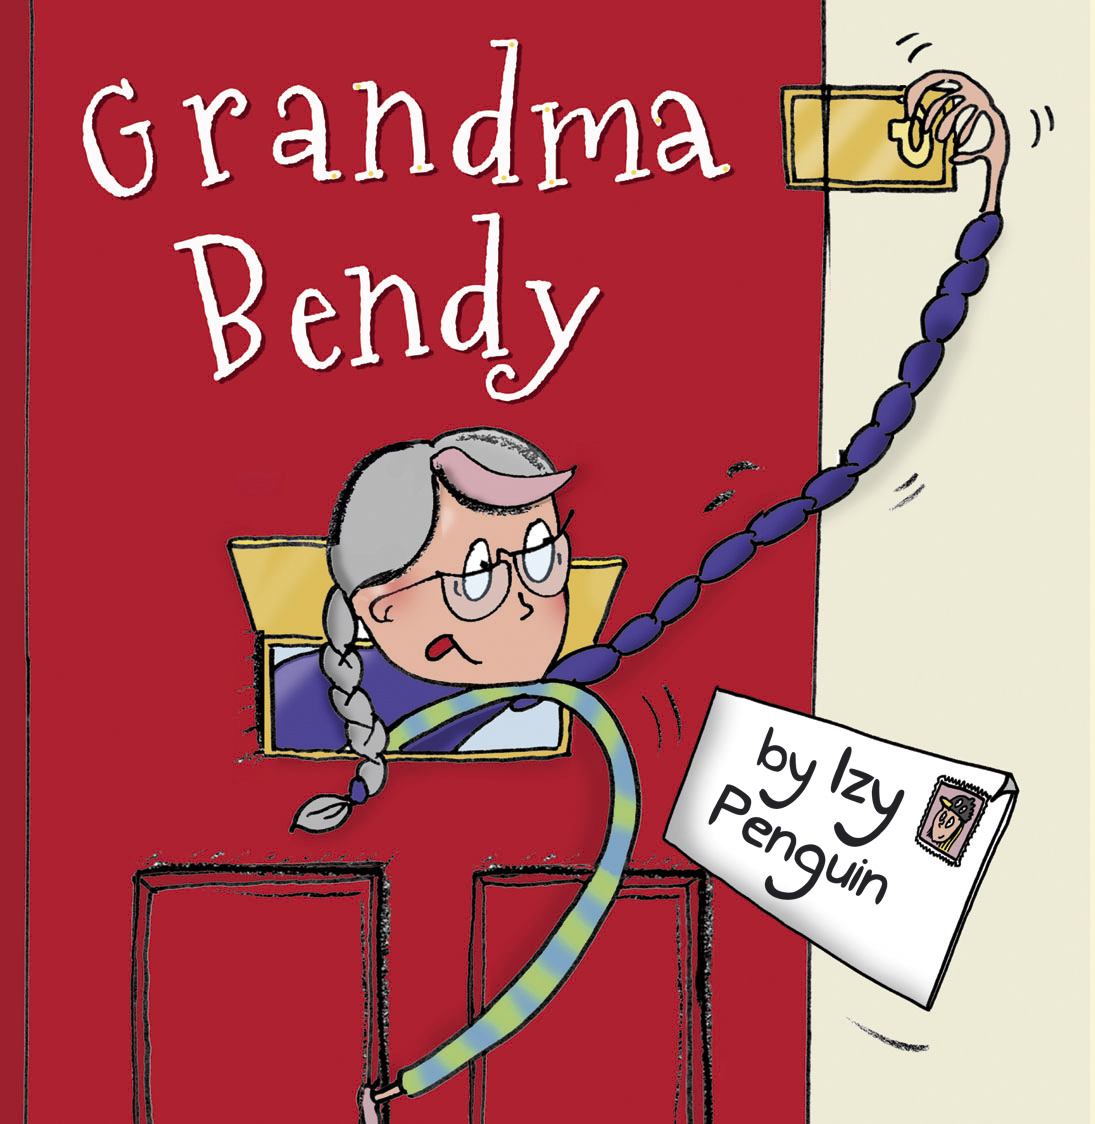 Grandma Bendy by Izy Penguin